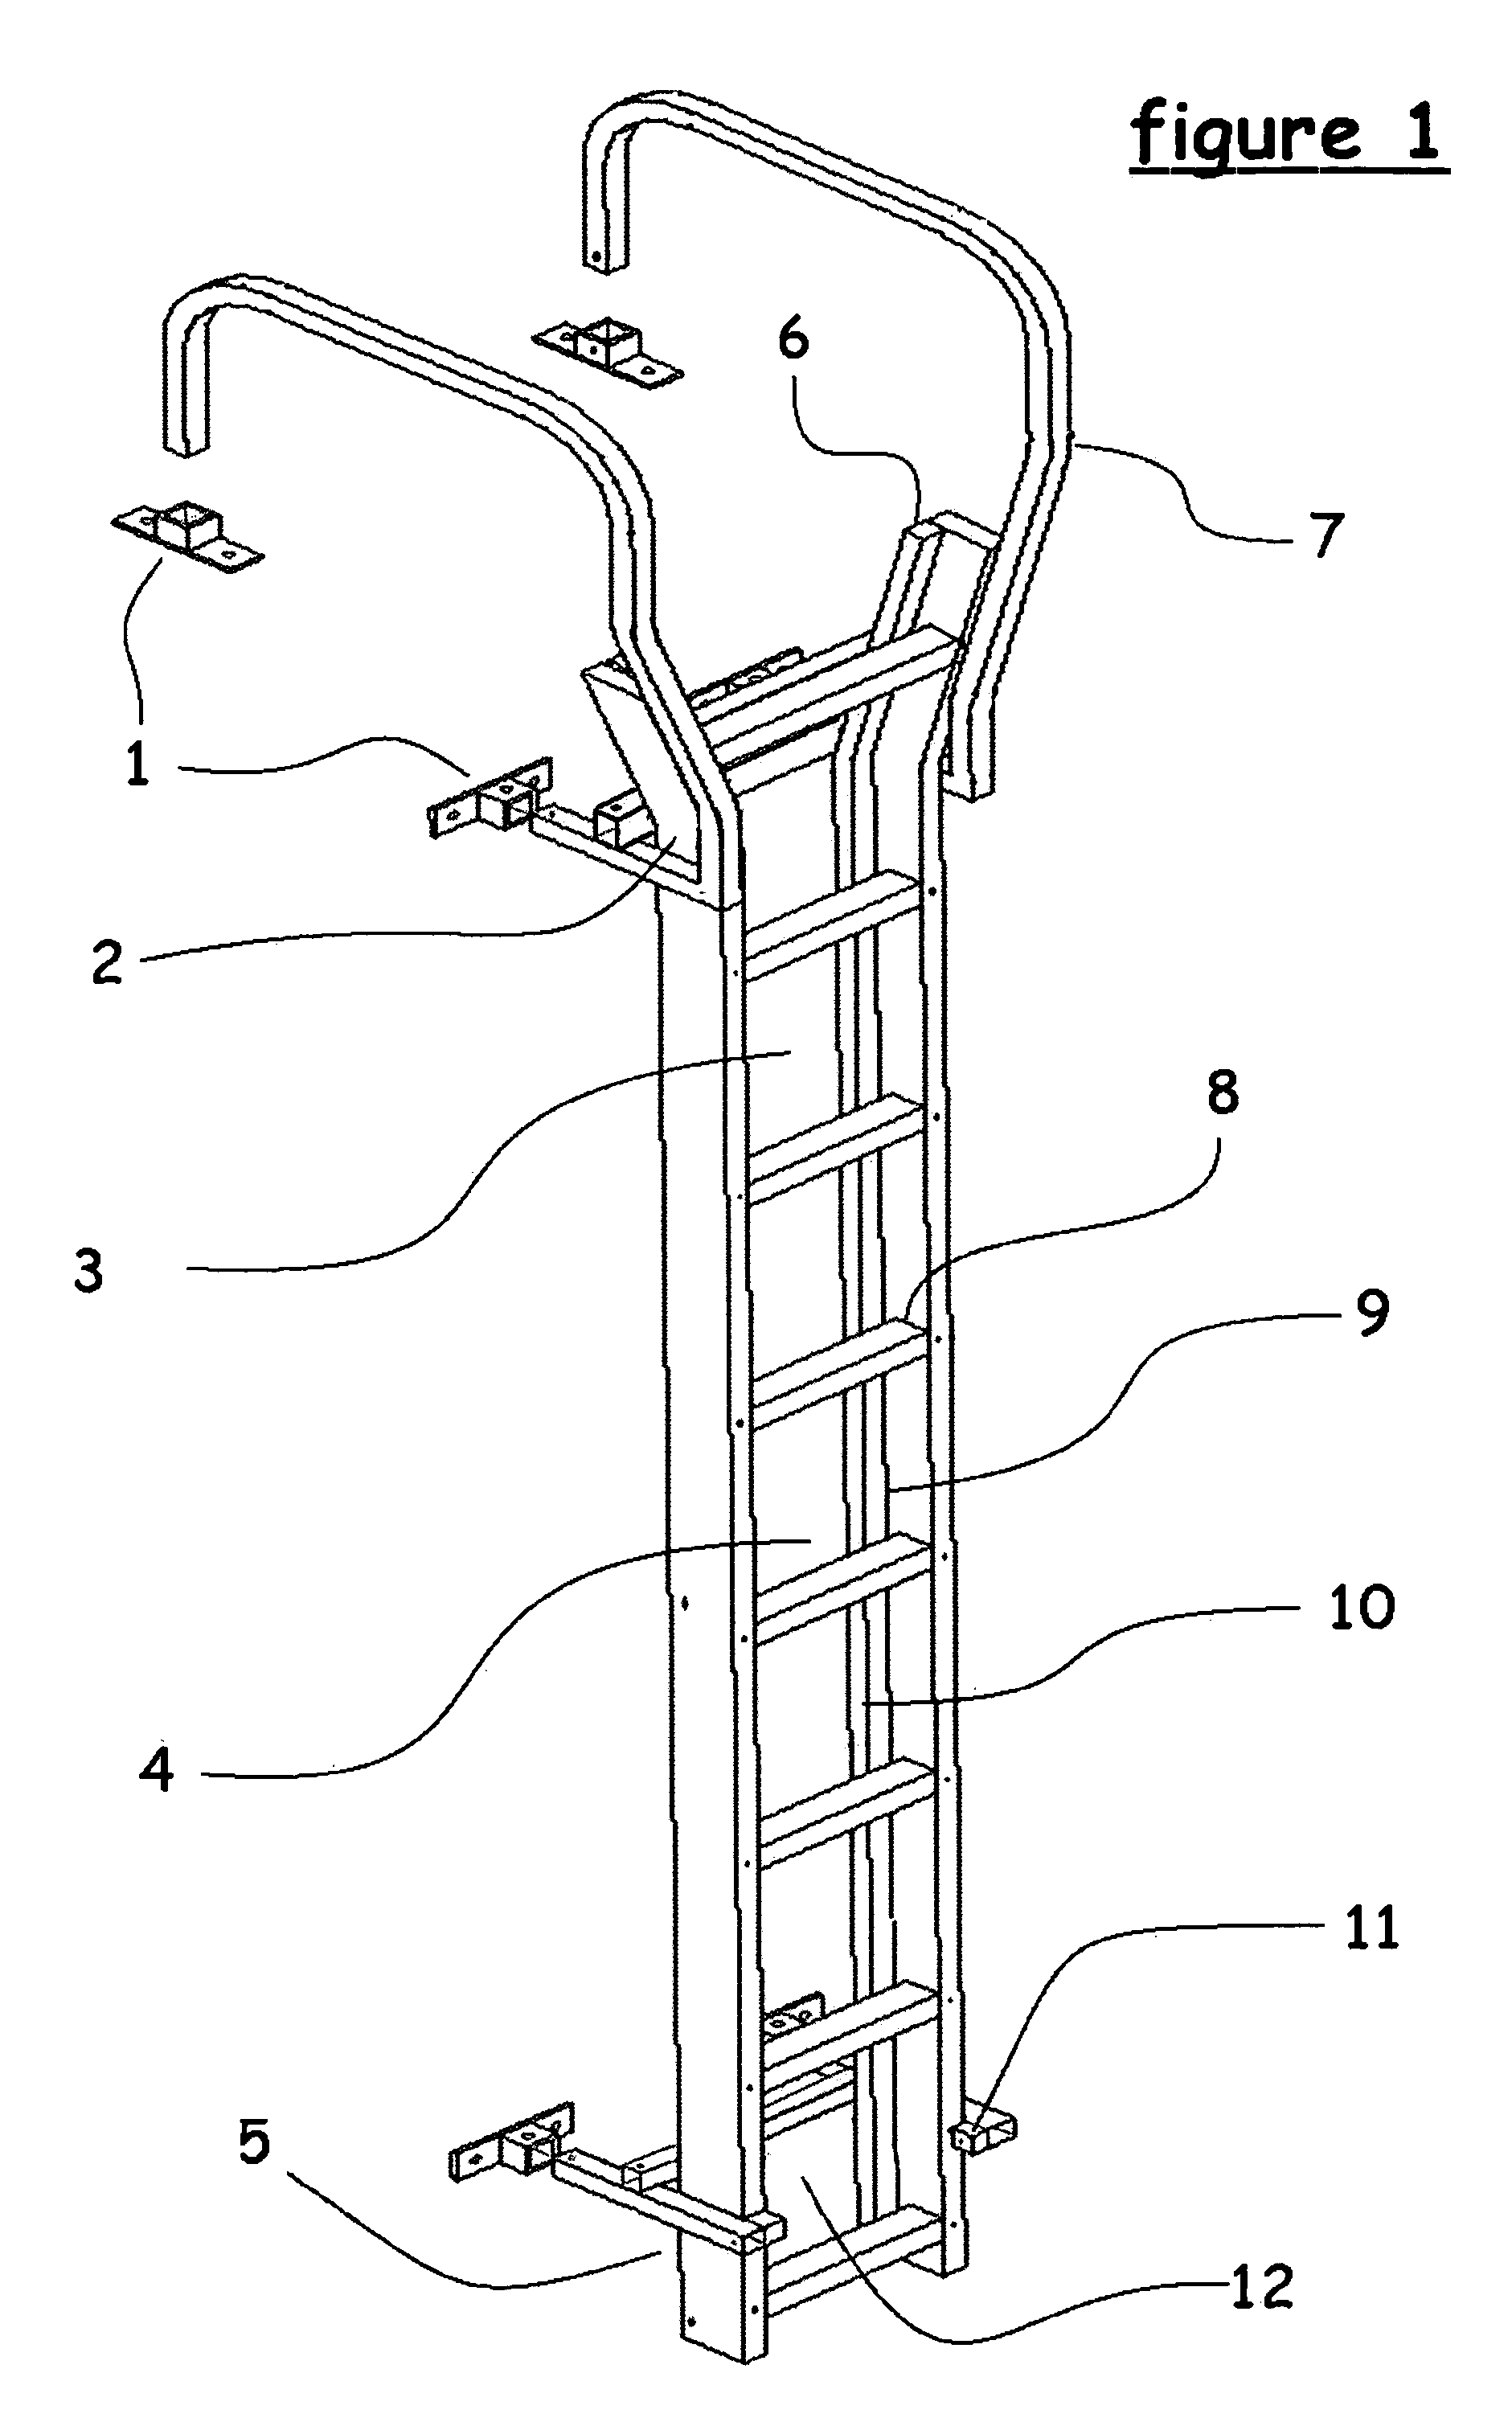 Portable ladder suspension apparatus or a portable ladder for suspension or the combination thereof